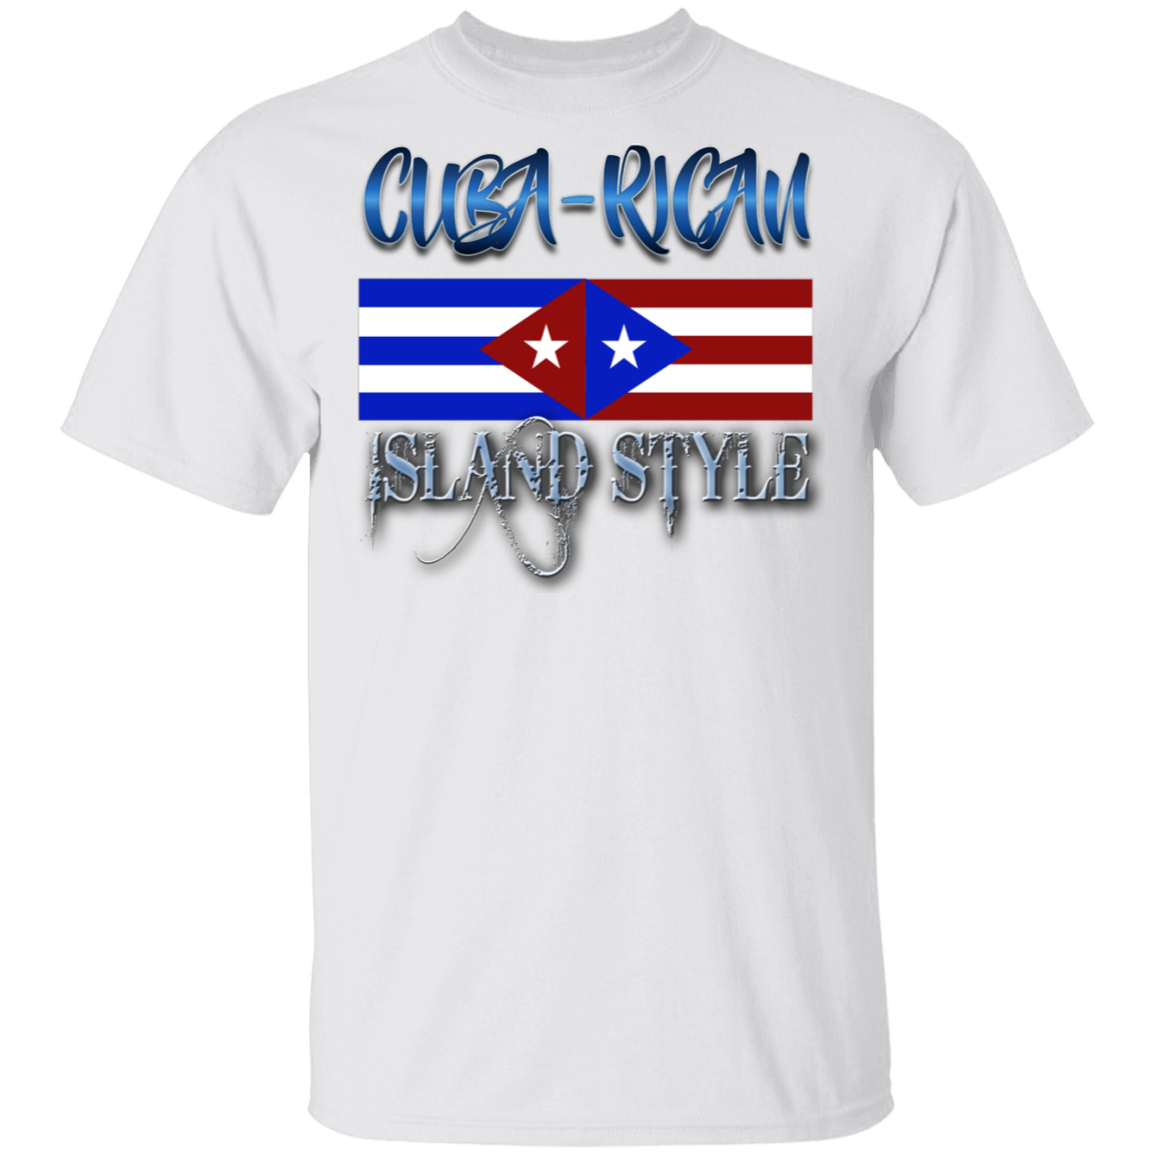 CUBA-RICAN  ISLAND STYLE 5.3 oz. T-Shirt